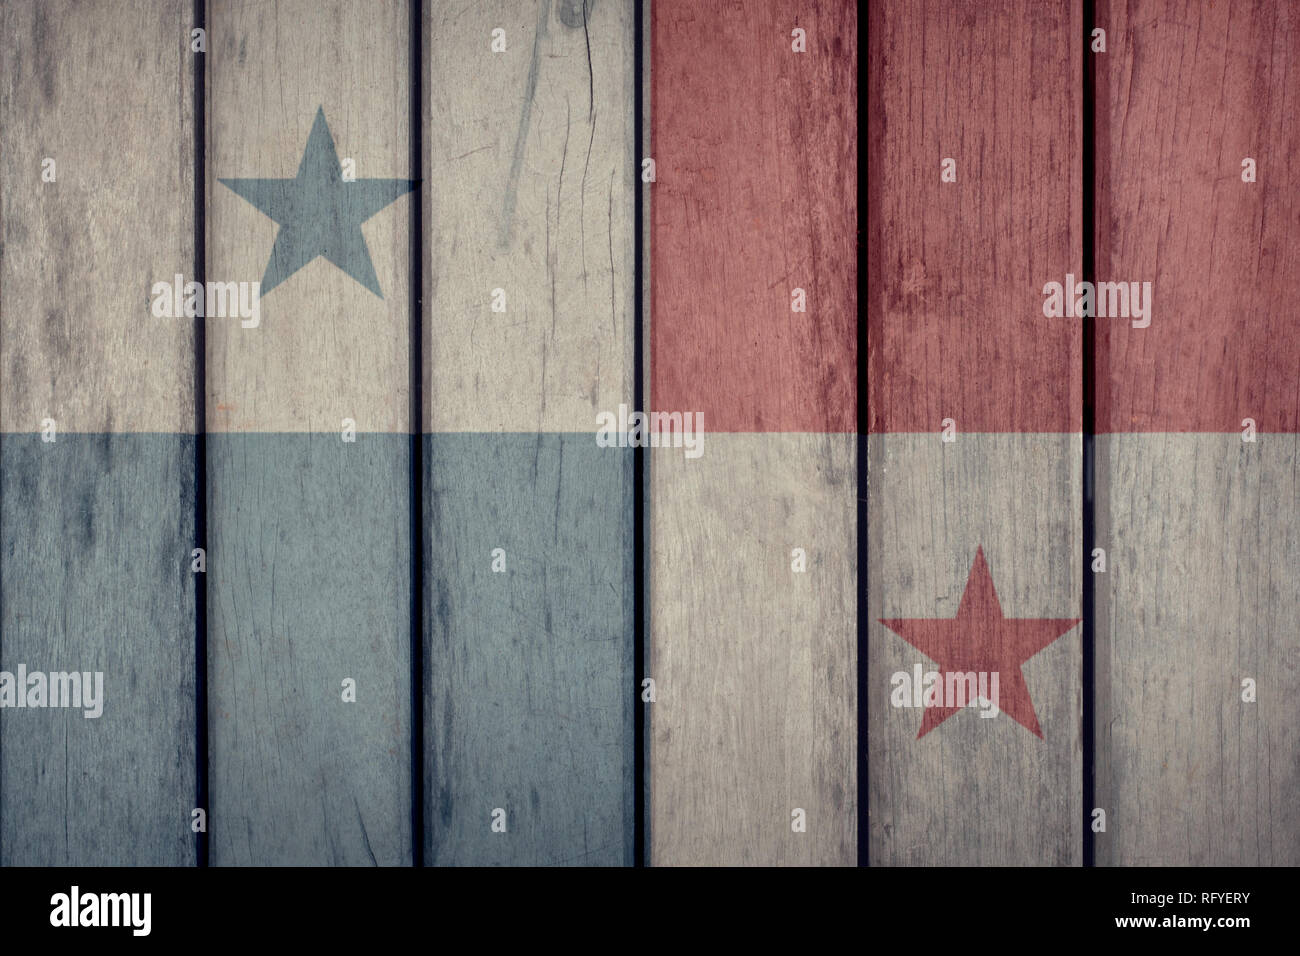 Panama Politics News Concept: Panamanian Flag Wooden Fence Stock Photo